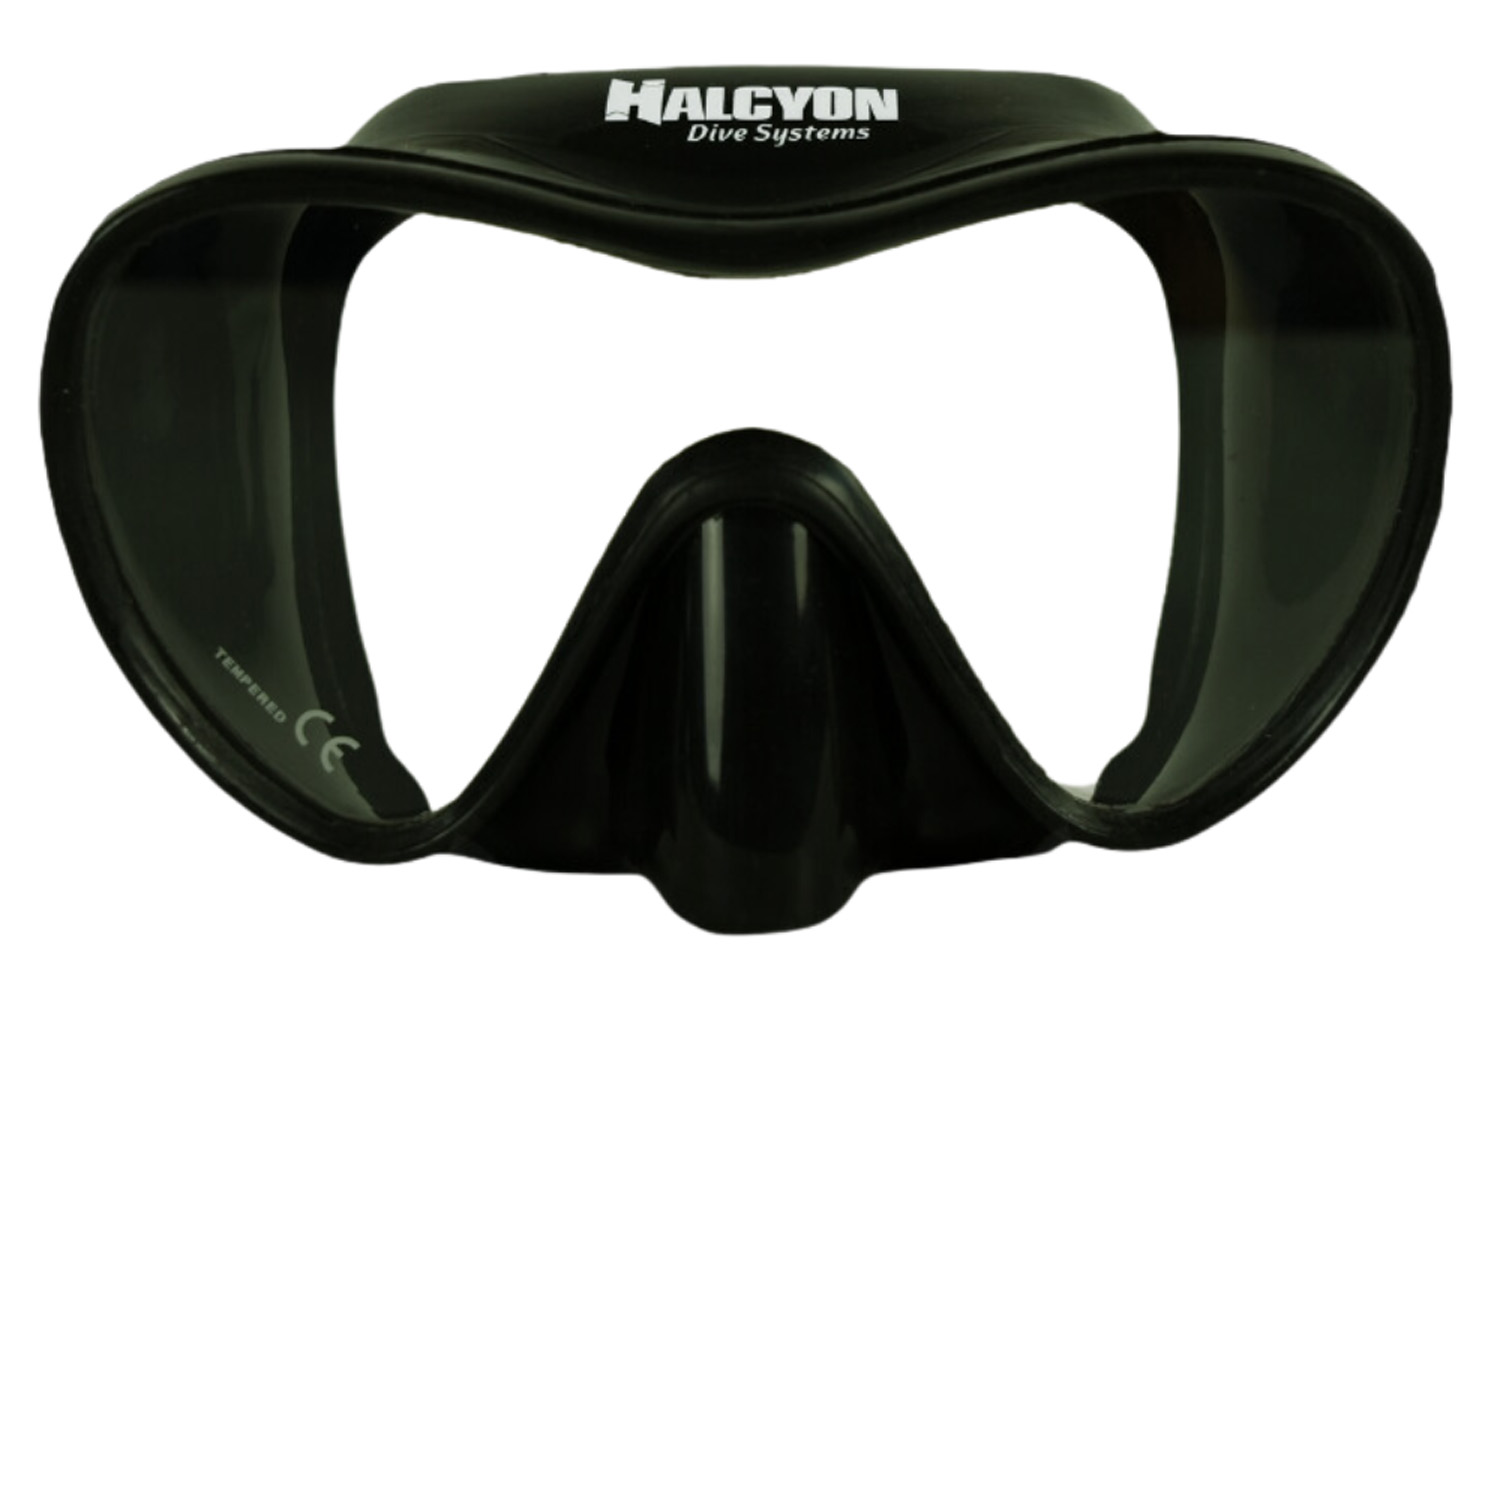 Halcyon UniVision Mask